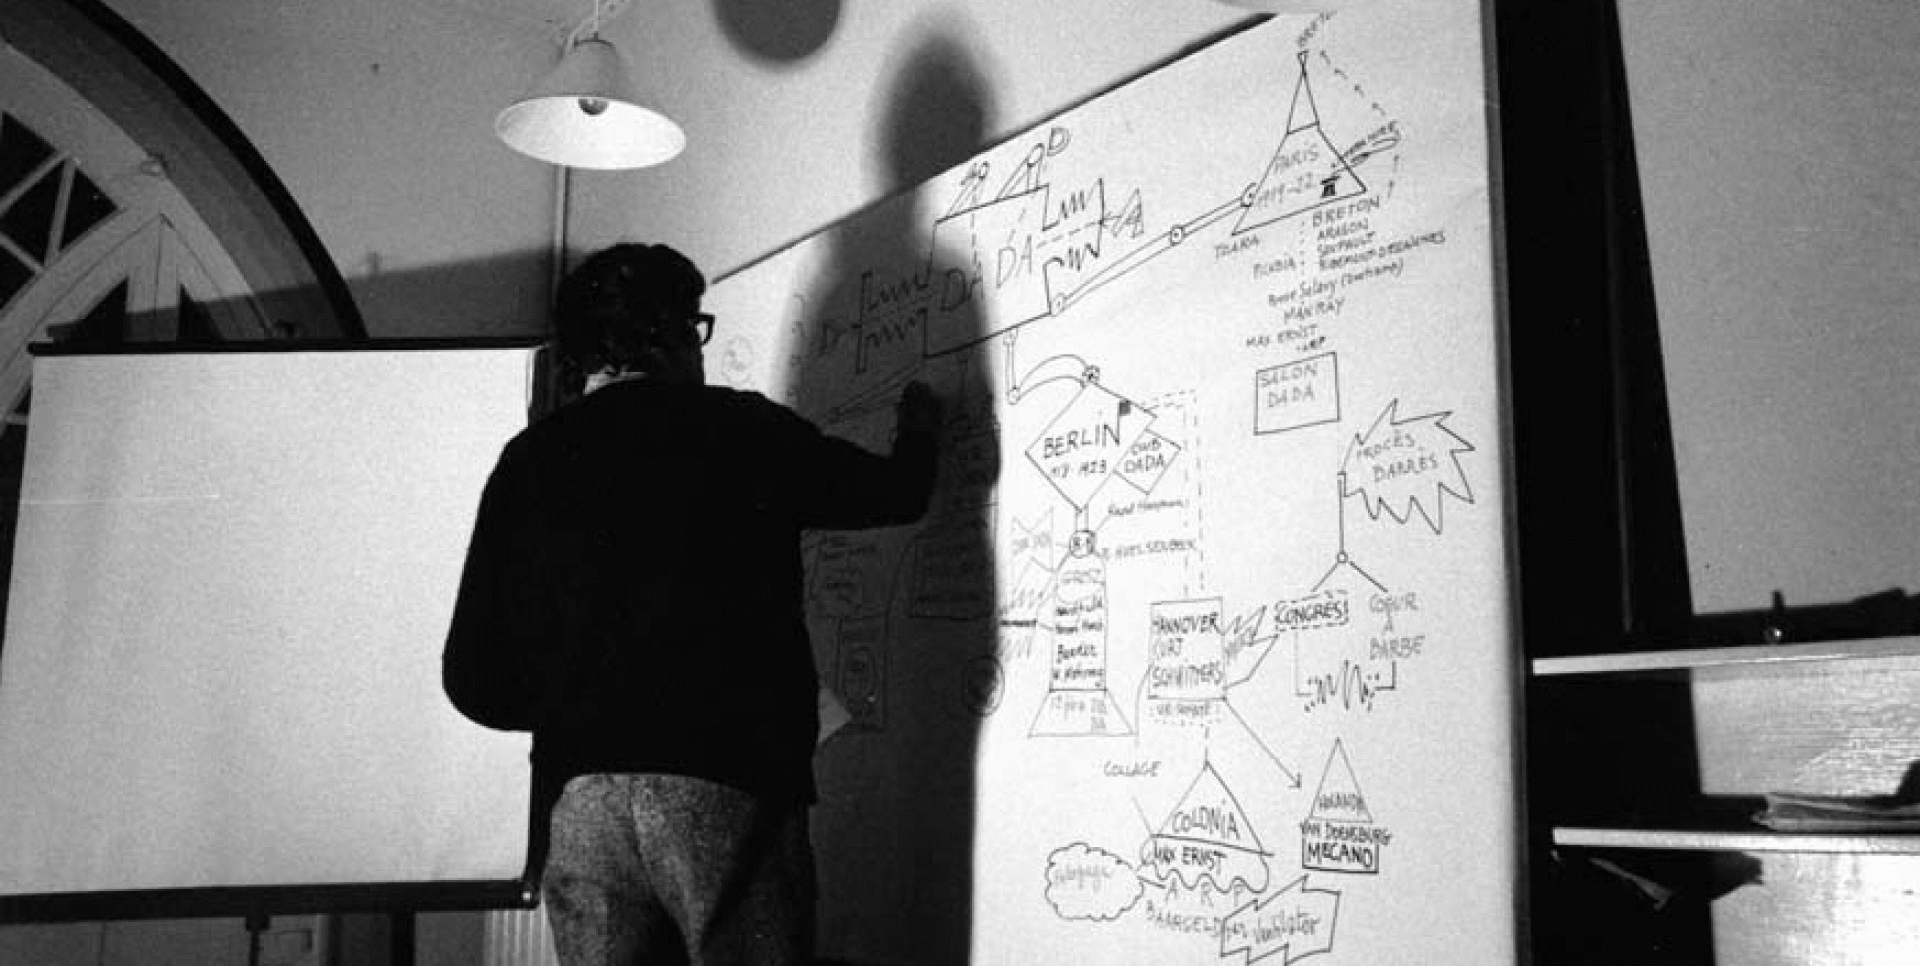 Albert Ràfols drawing a diagram on the Dadaist movement